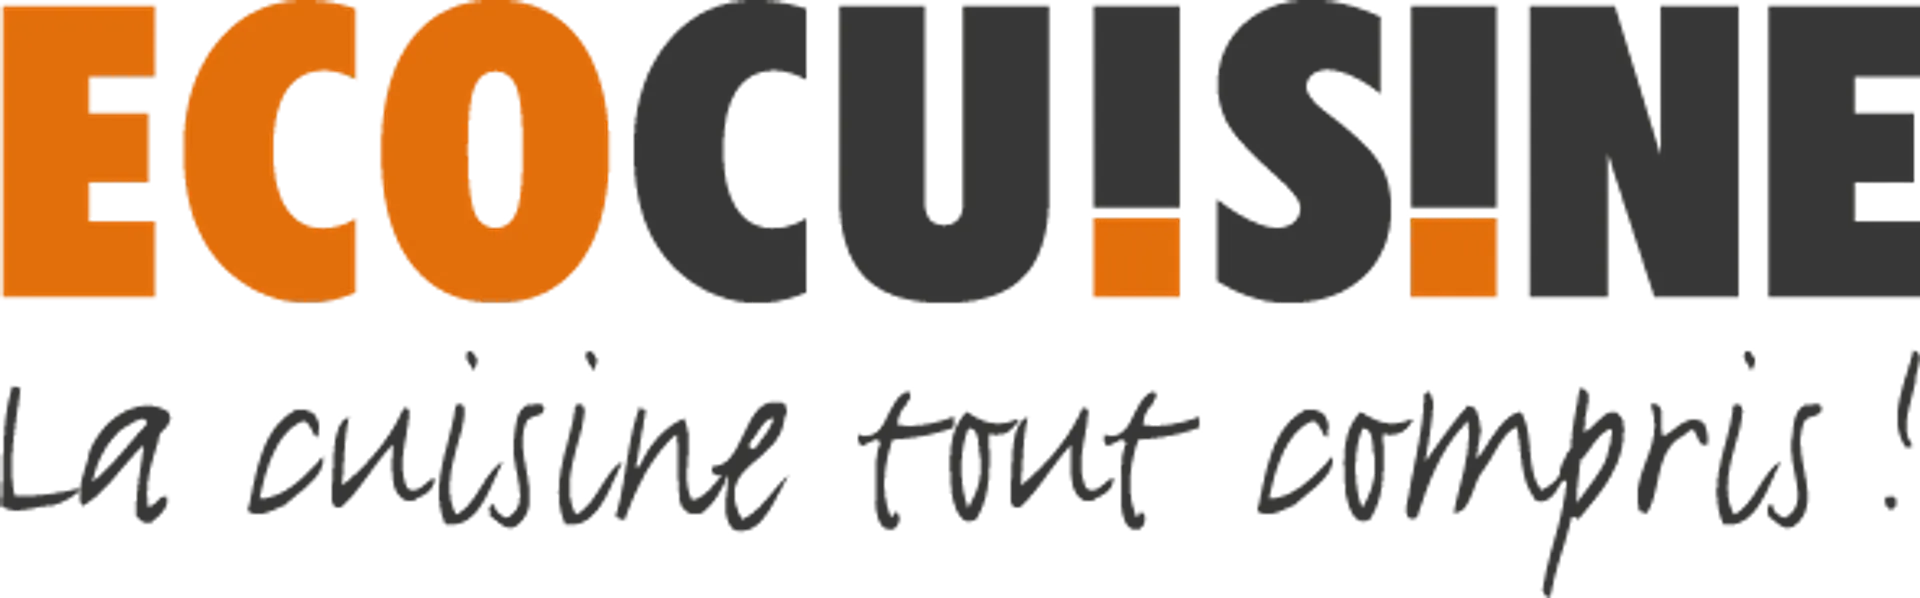 ECOCUISINE logo du catalogue